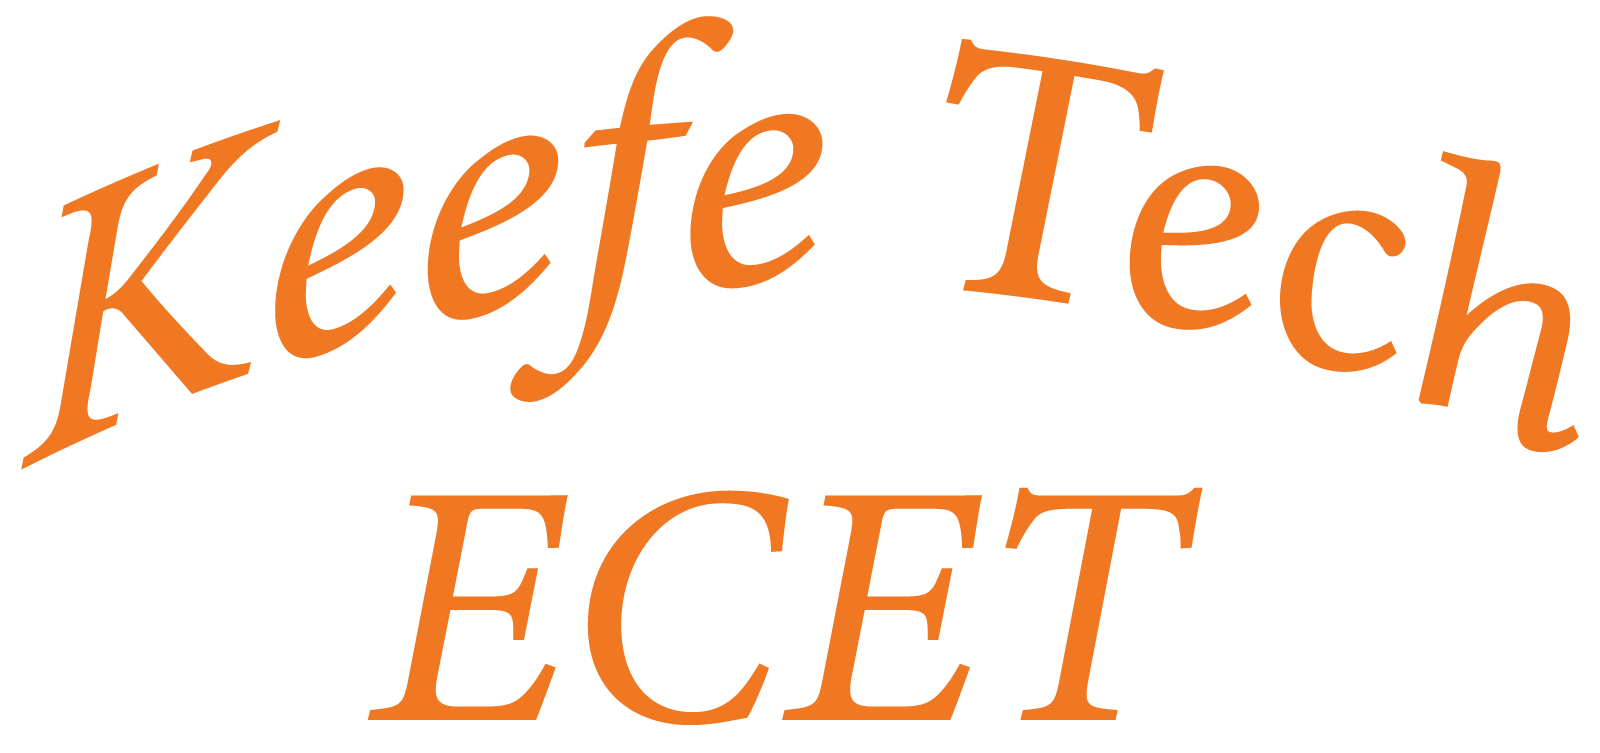 Keefe-Tech-ECET-Orange.png